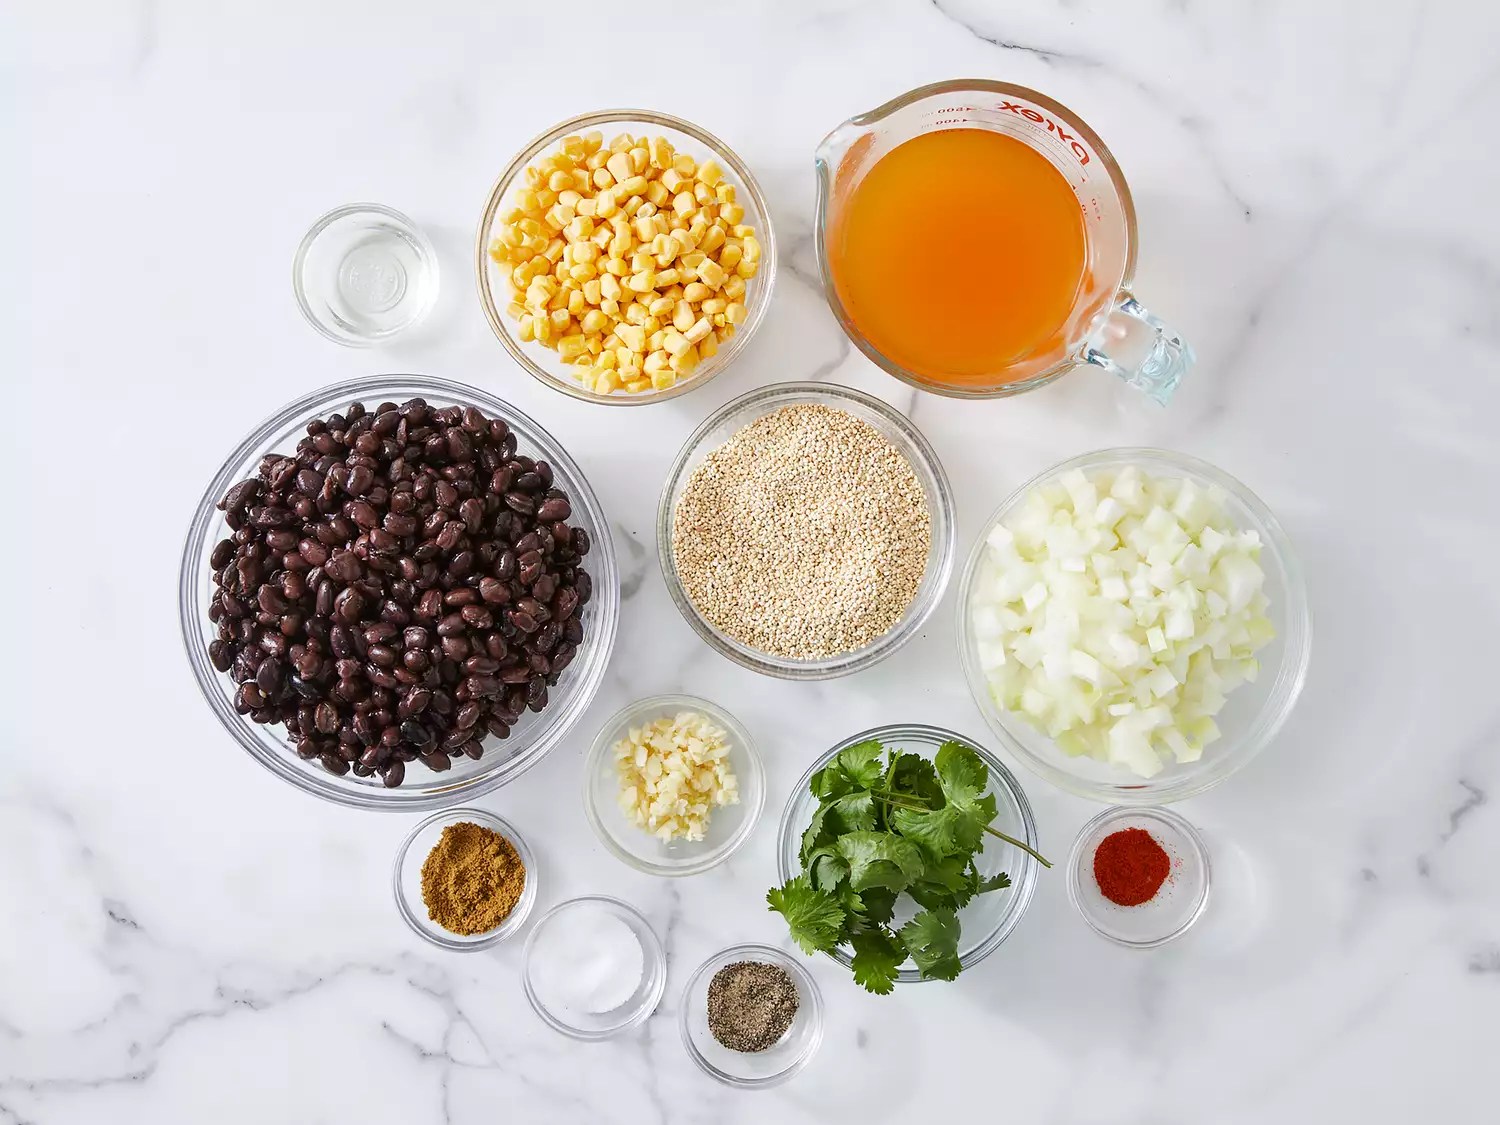 America’s Top Chef Reveals the Ultimate Quinoa and Black Beans Recipe